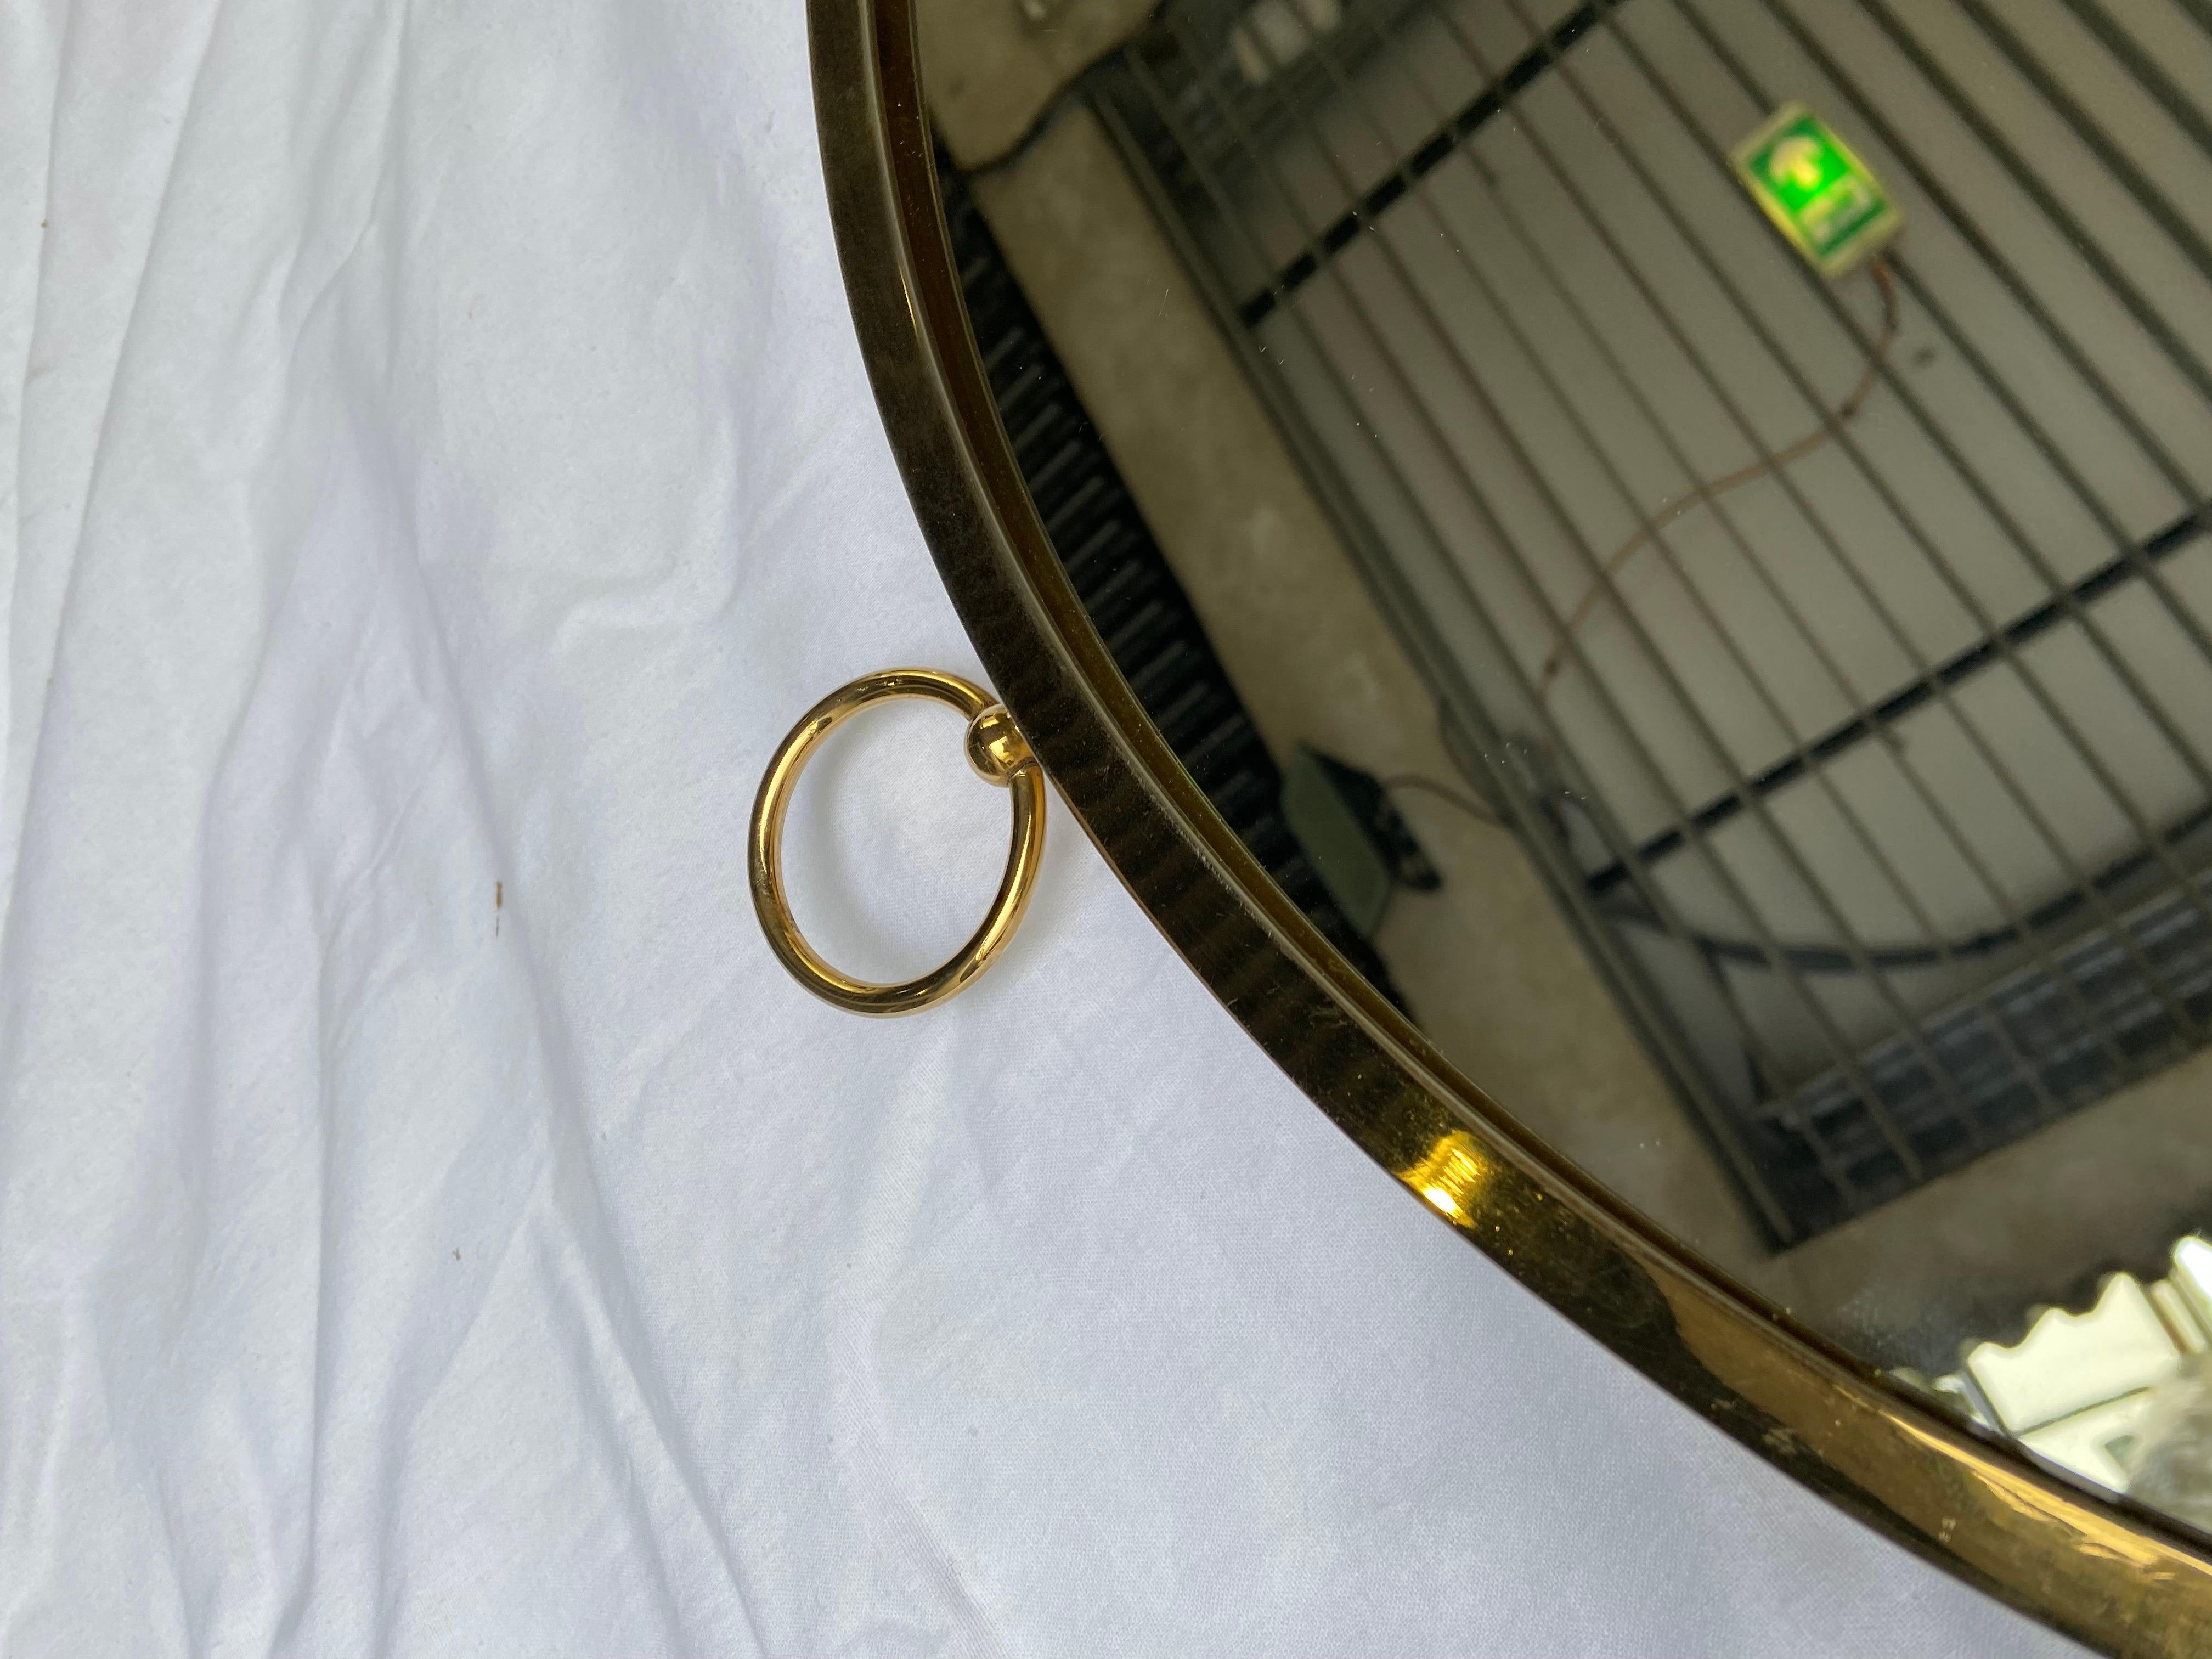 Gusset mirror - Piero Fornasetti 
Mirror and brass 
Measure: Diameter 49 cm 
Price: 1650 Euros.